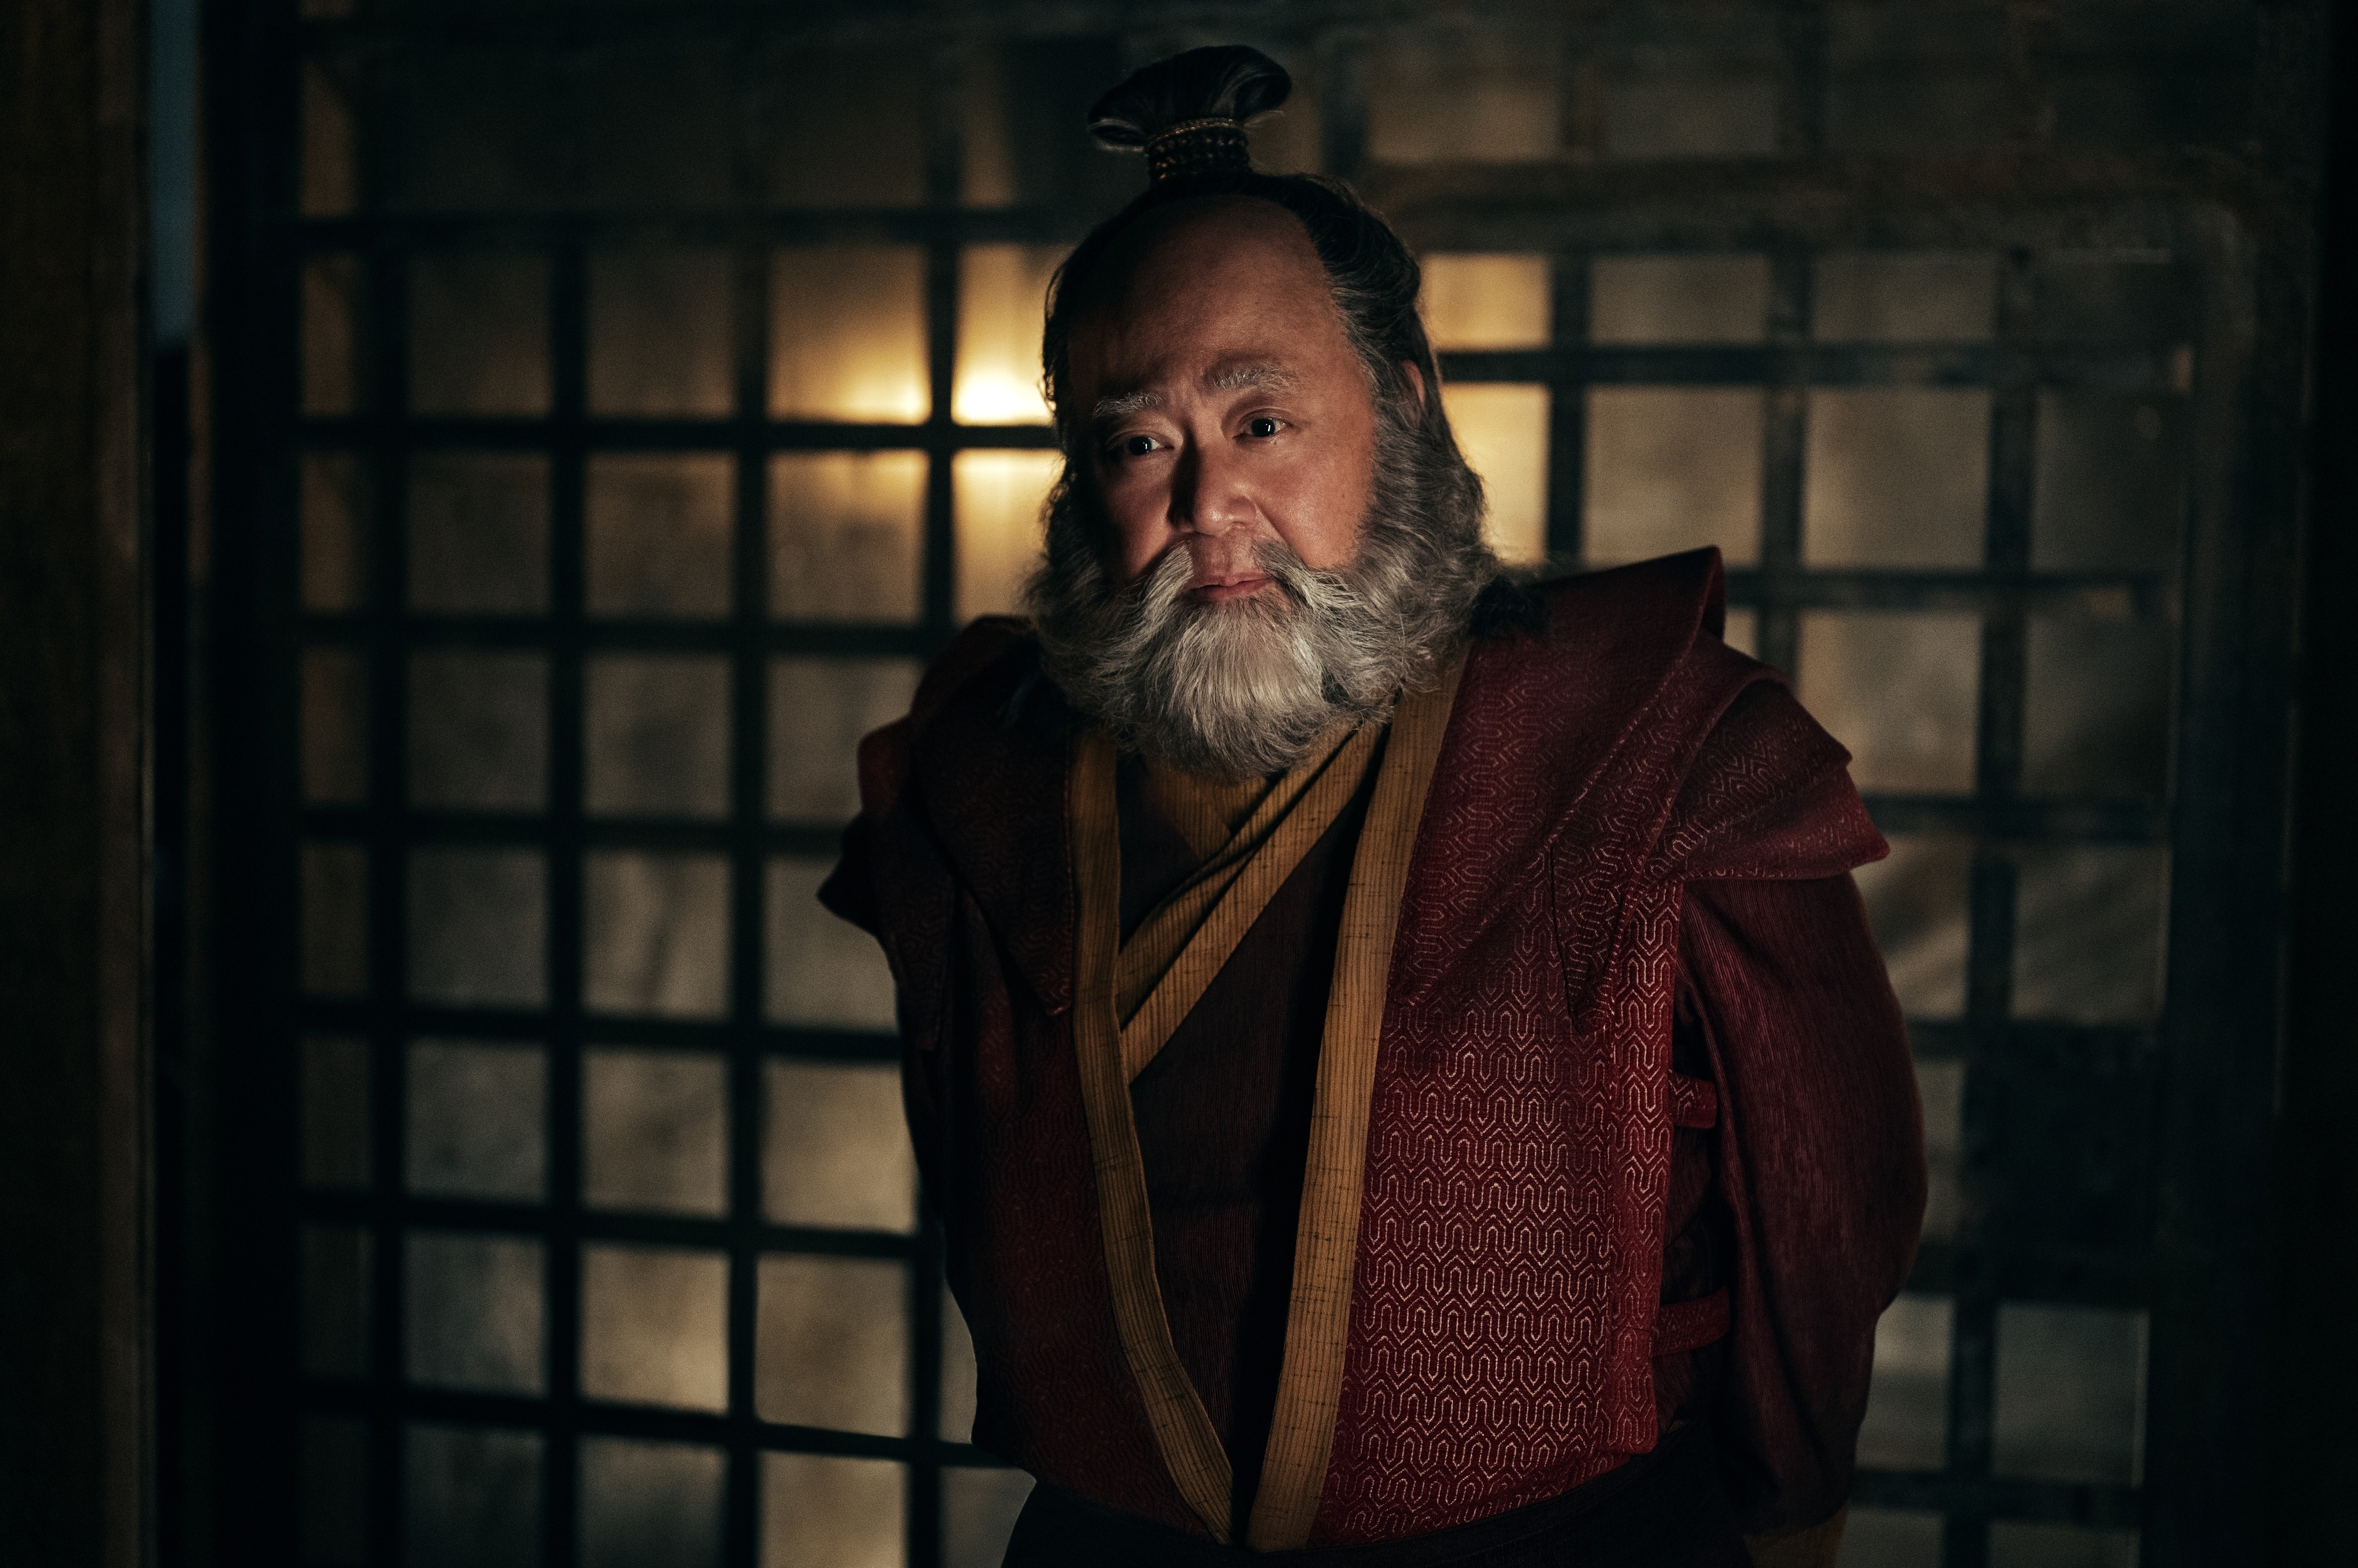 Paul Sun-Hyung Lee as Iroh in season 1 of Avatar: The Last Airbender